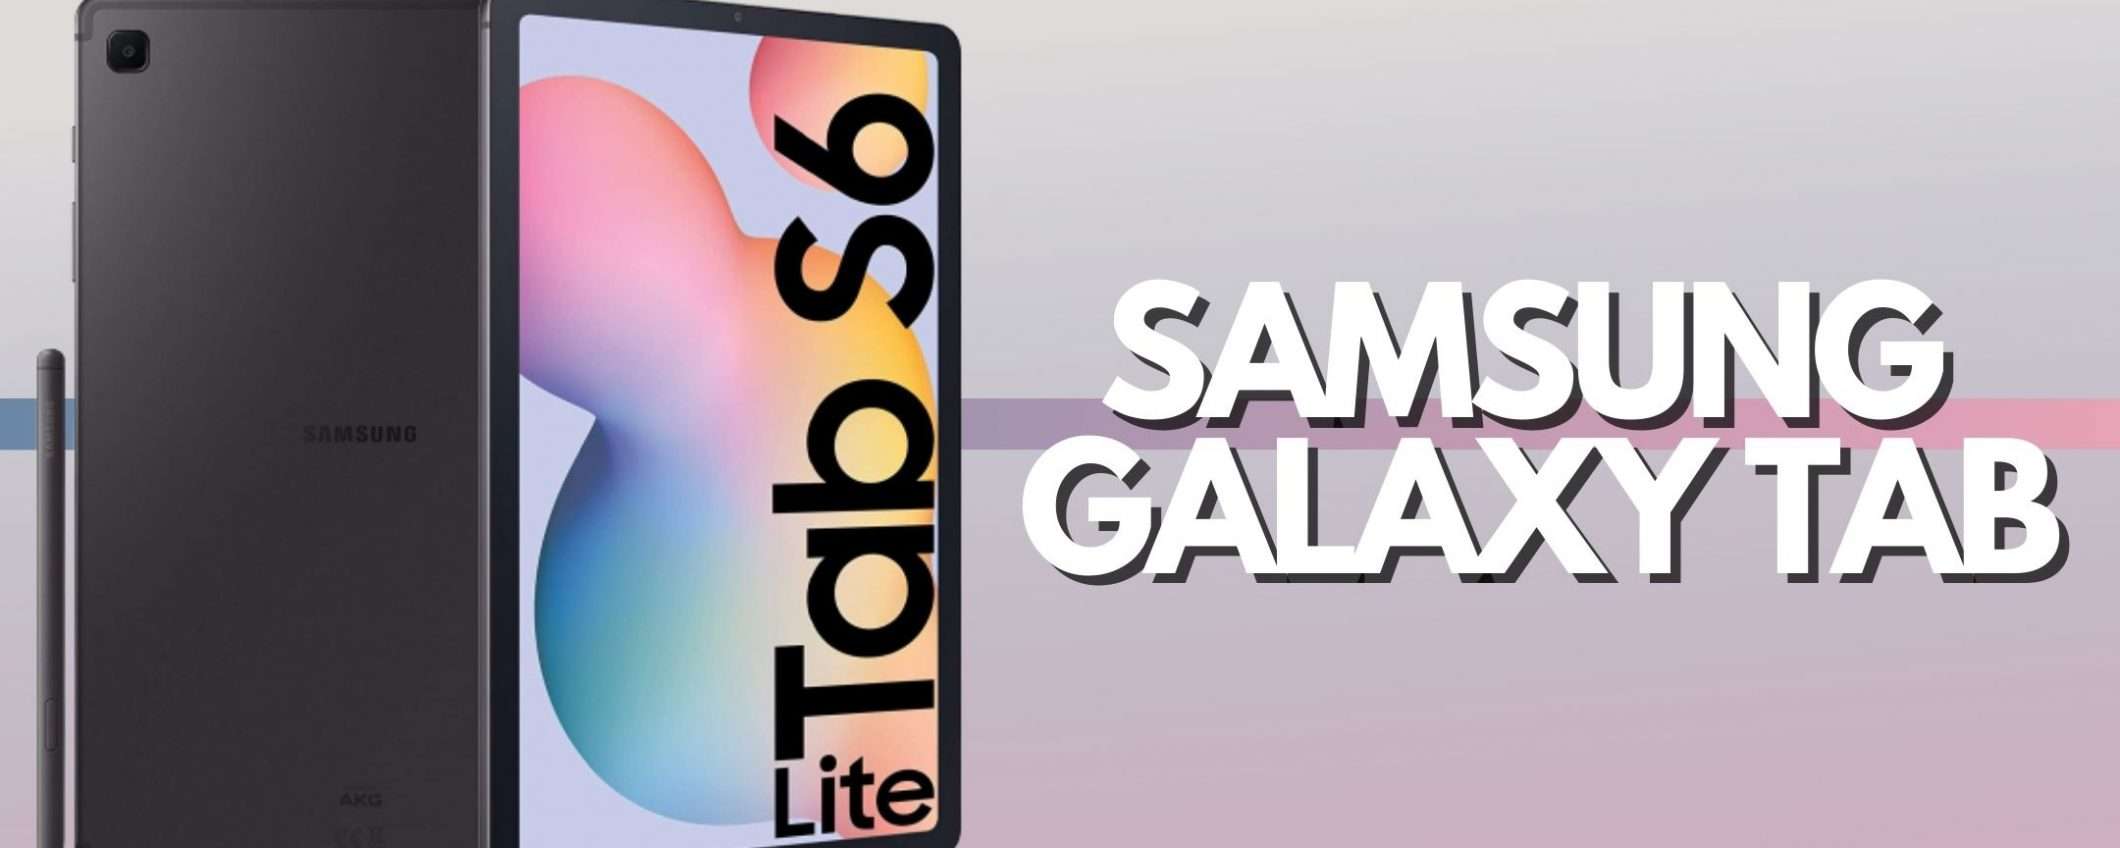 Samsung Galaxy Tab S6 Lite: il tablet a prezzo WOW (-130€)